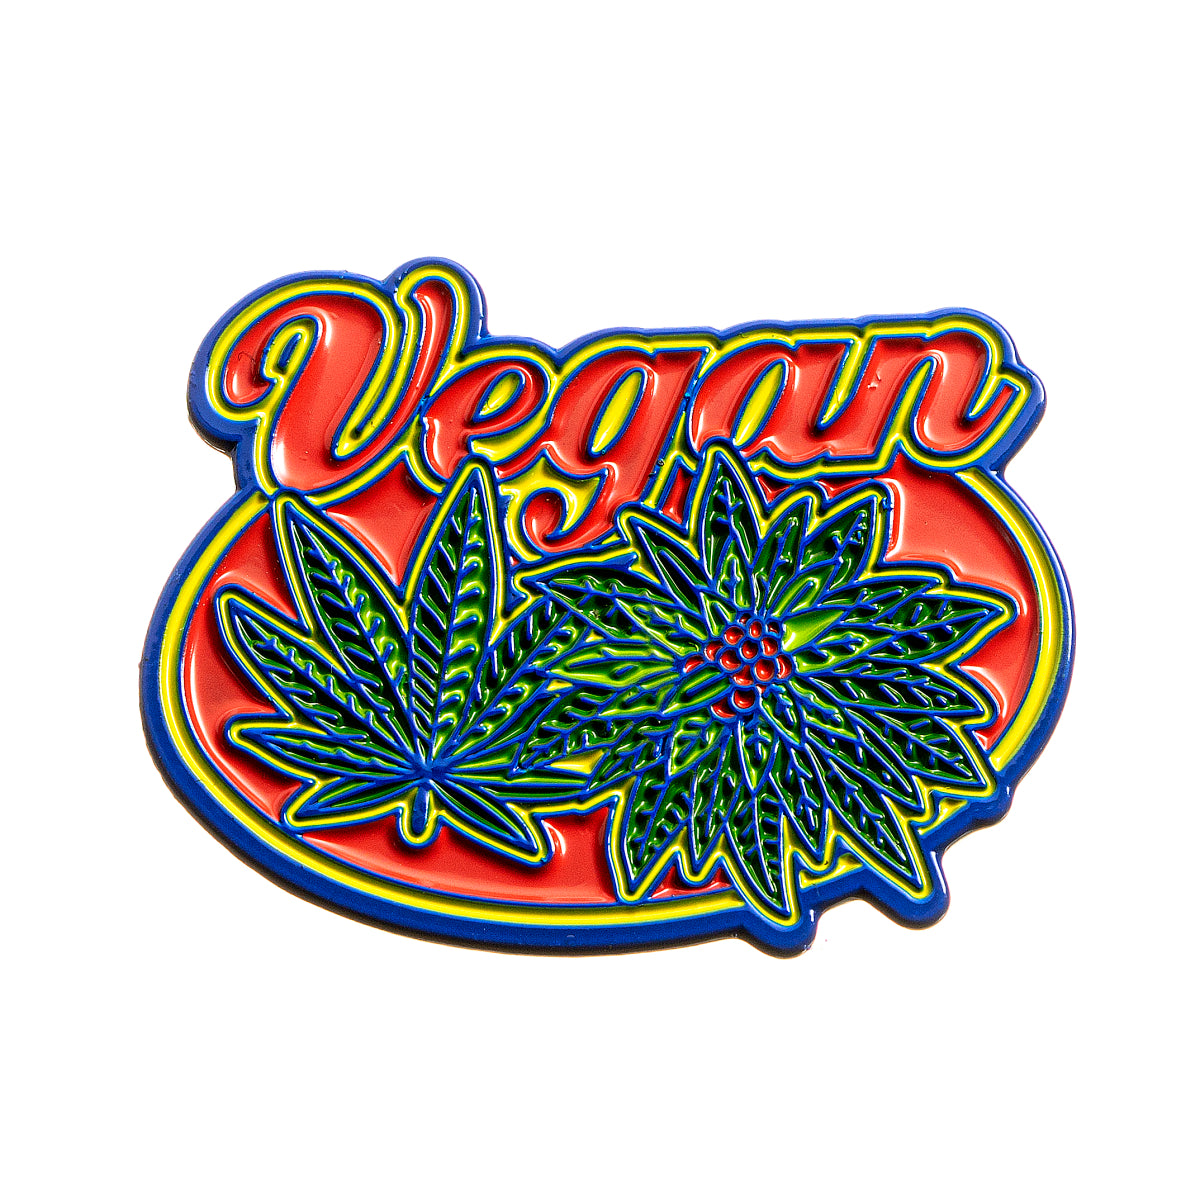 Vegan Pin